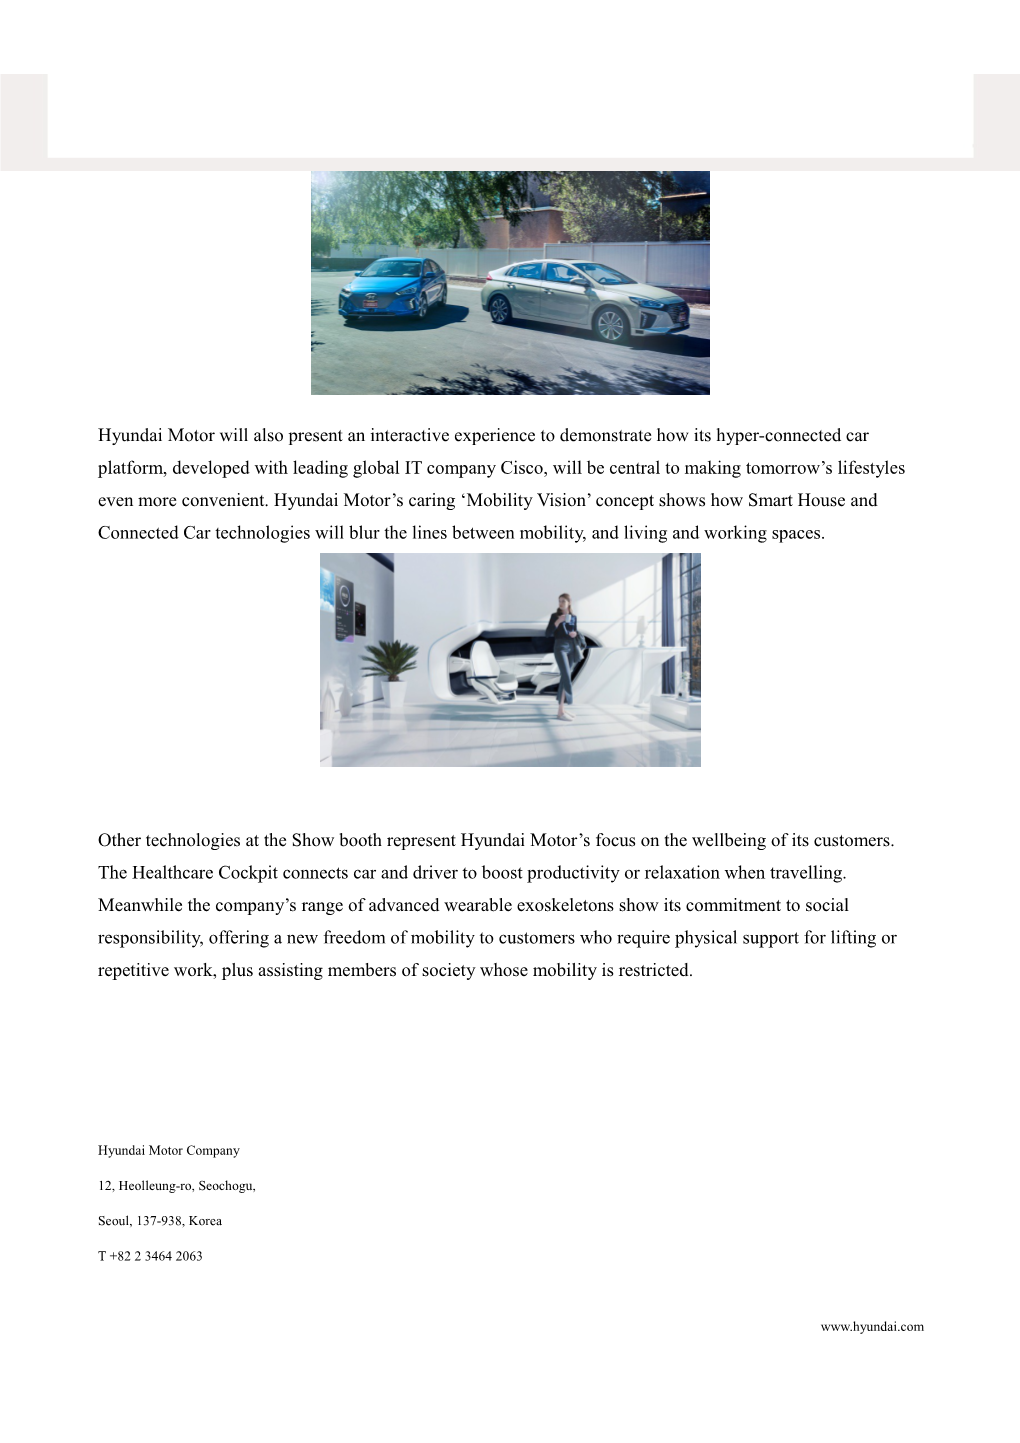 Hyundai Motor to Showcase Vision for Future Mobility